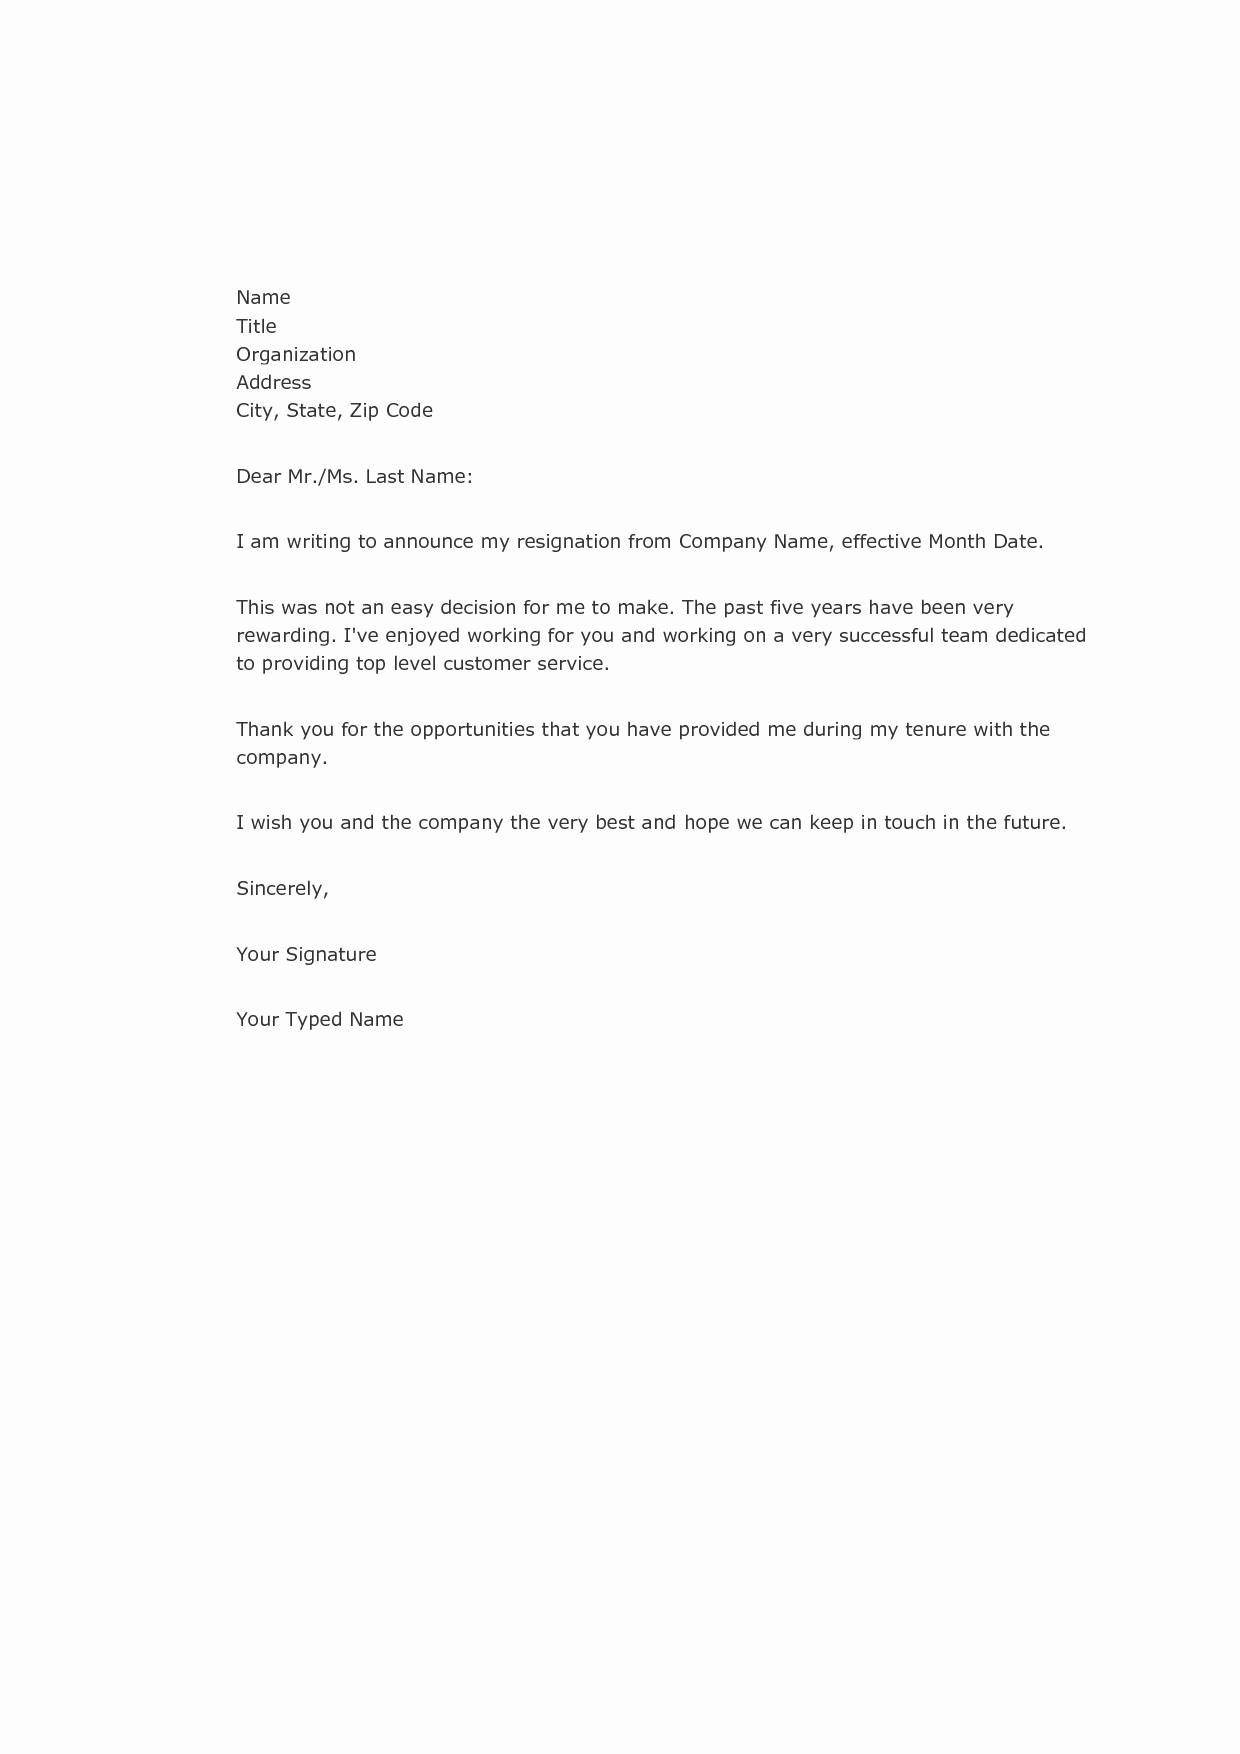 Sample Of Resignation Letter to Employer